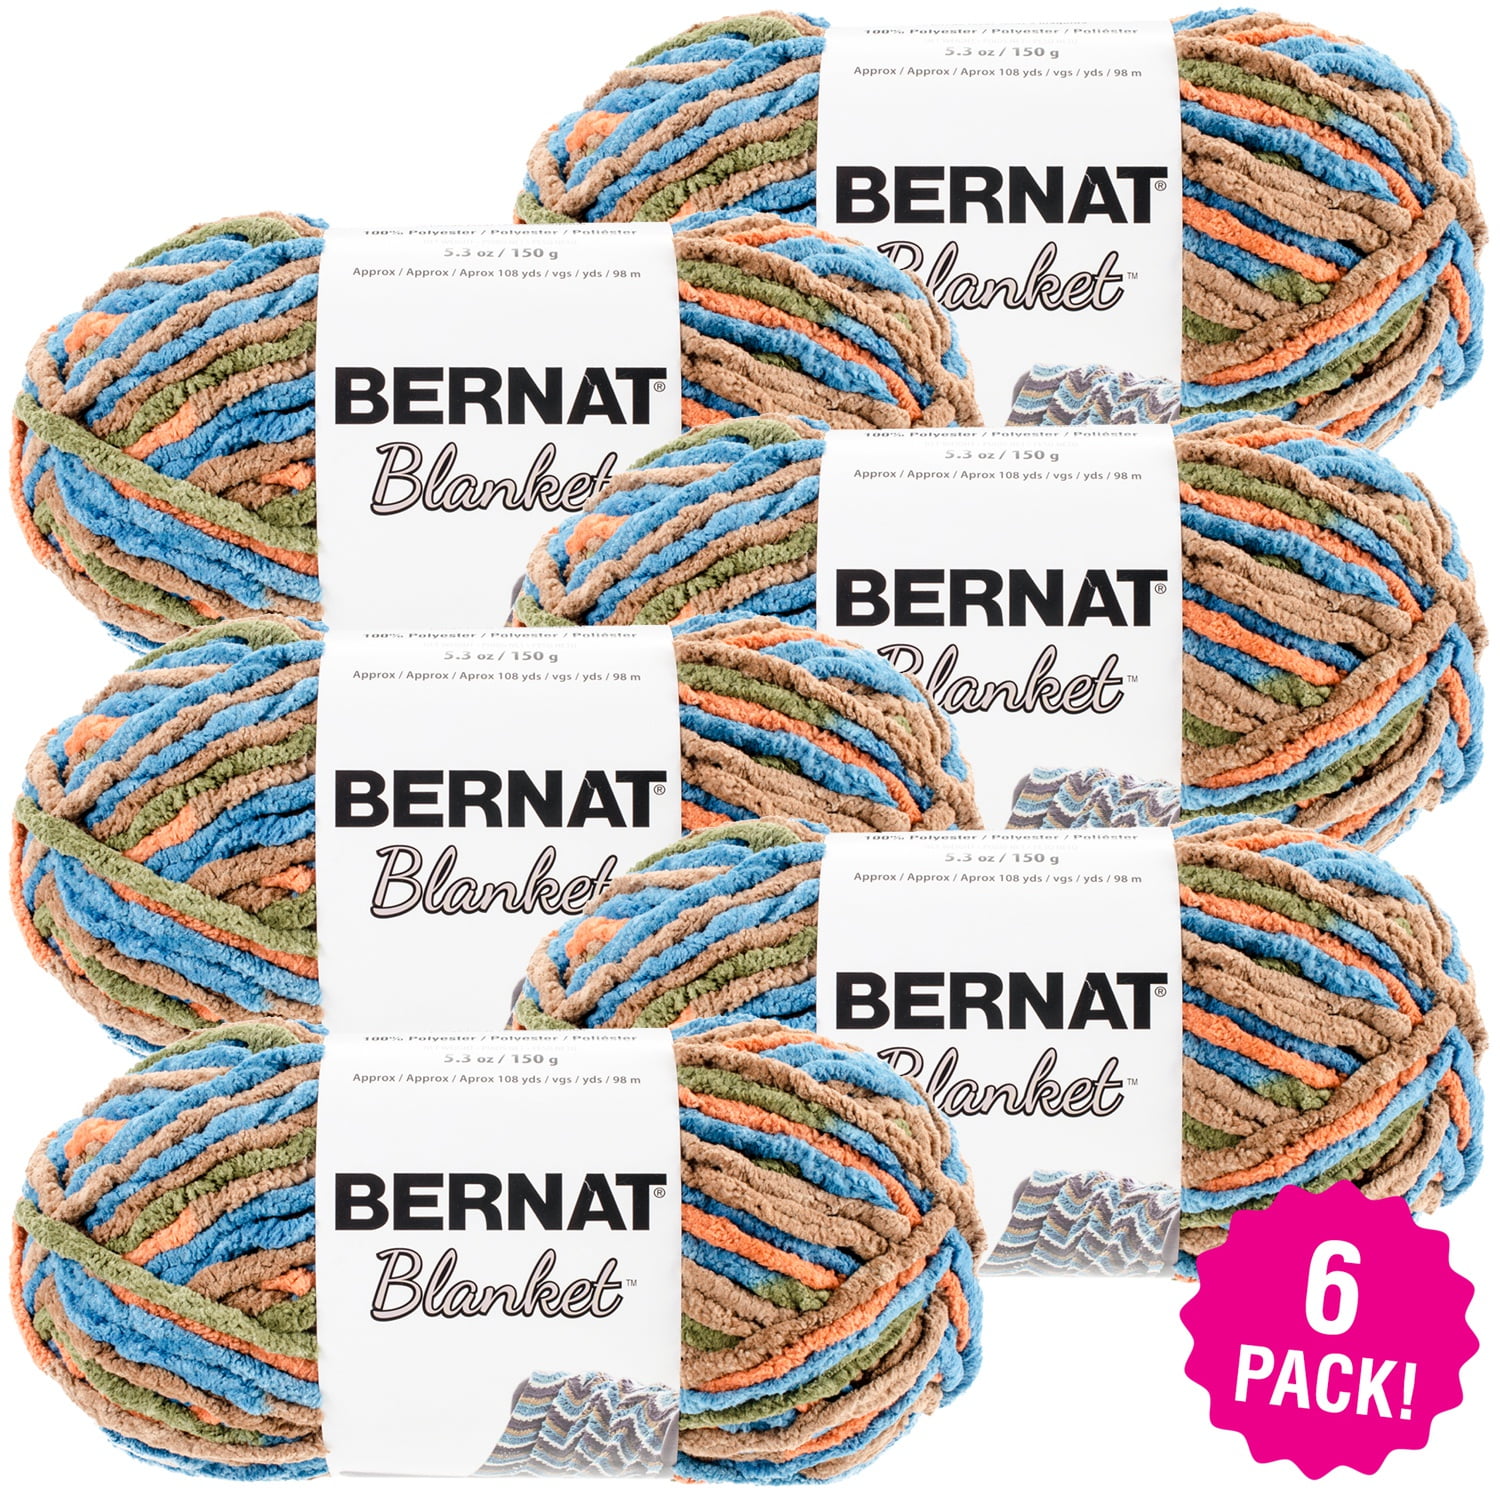 Bernat Blanket Yarn in Coastal Cottage 150g Ball & from Smoke Free Home New 